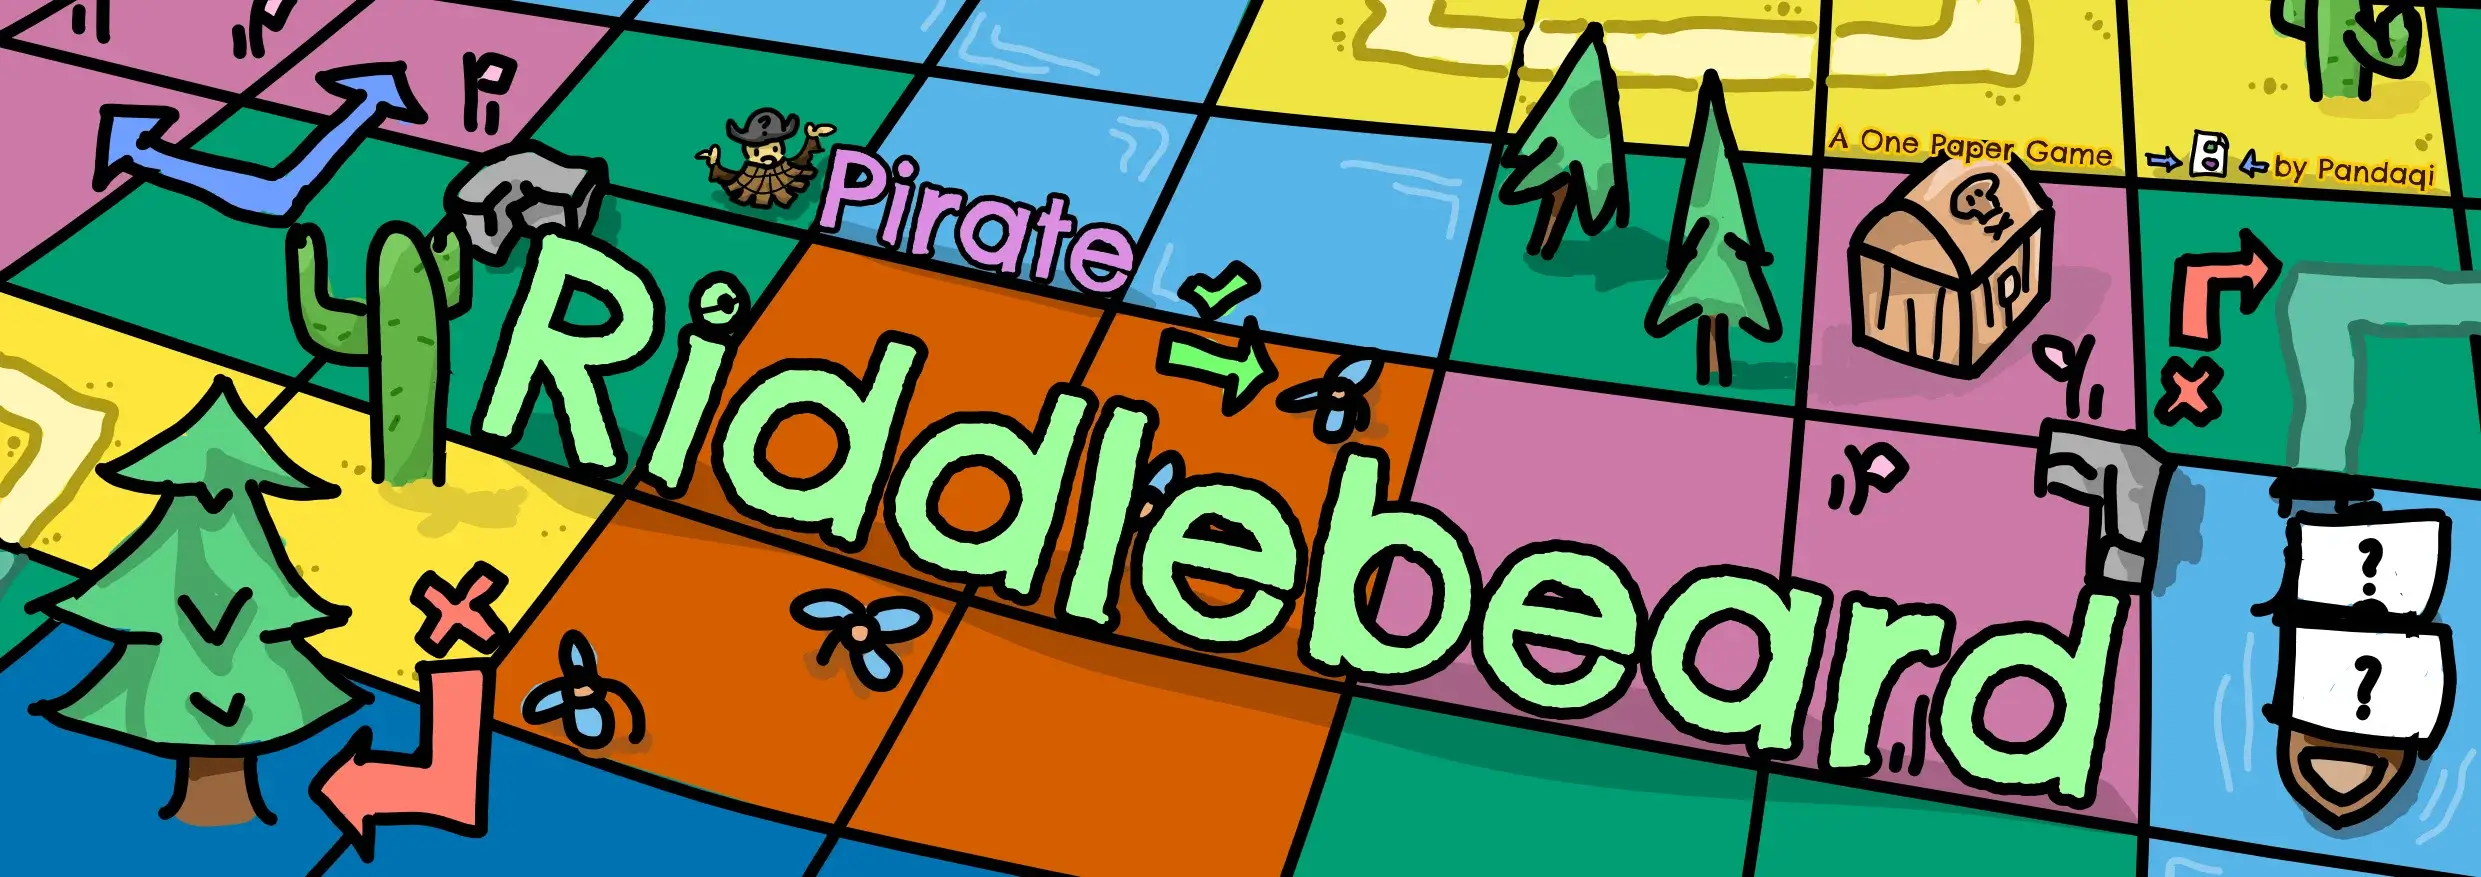 Pirate riddlebeard header